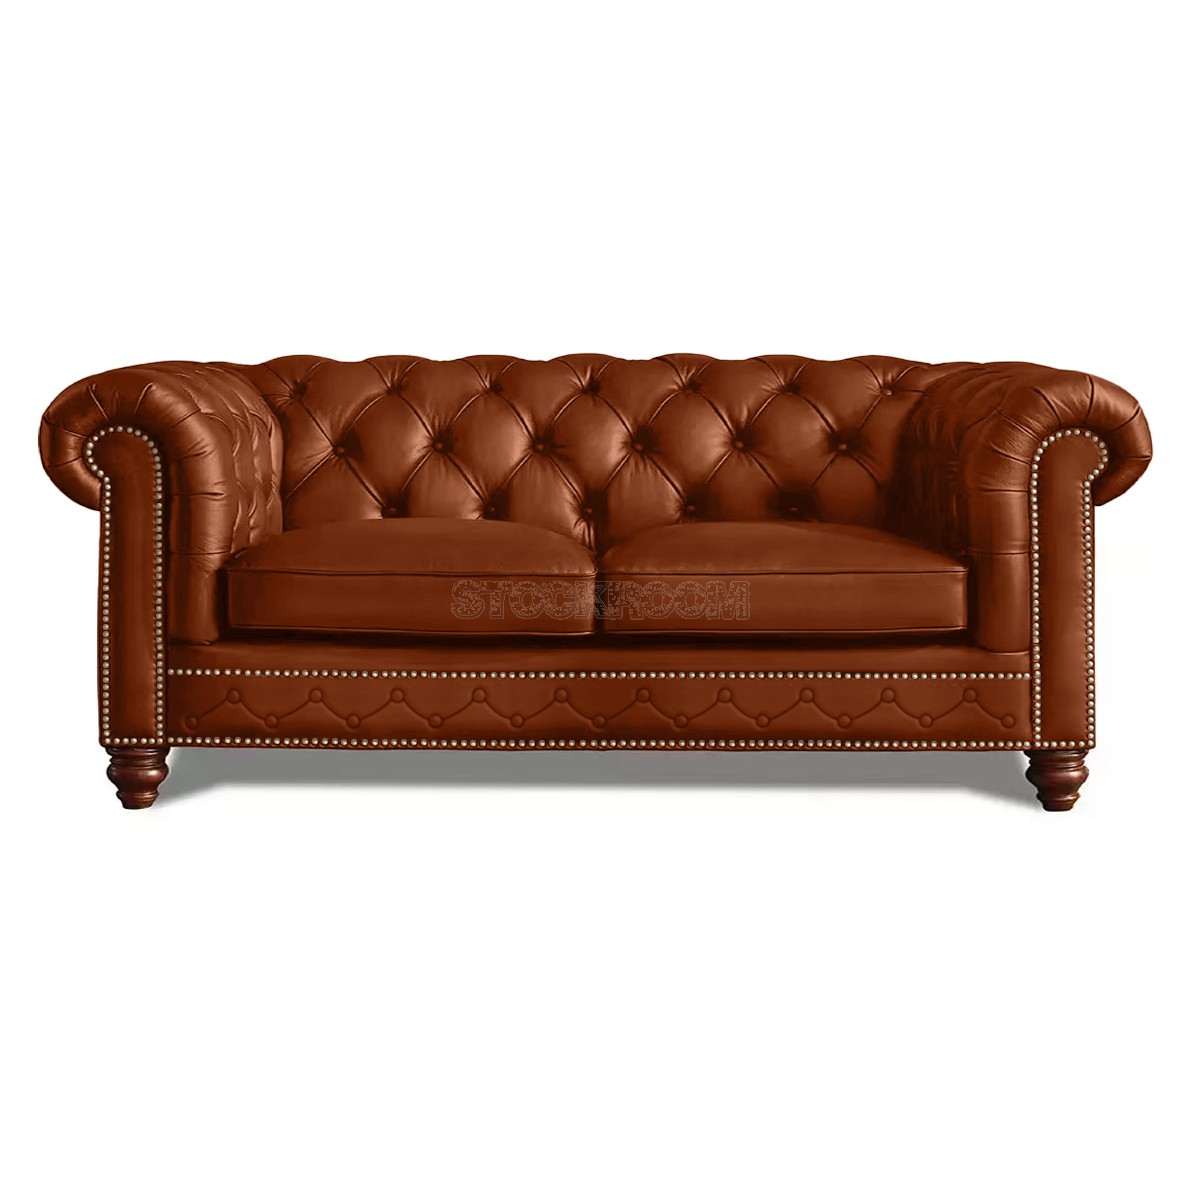 STOCKROOM Chesterfield Sofa - 2 Seater